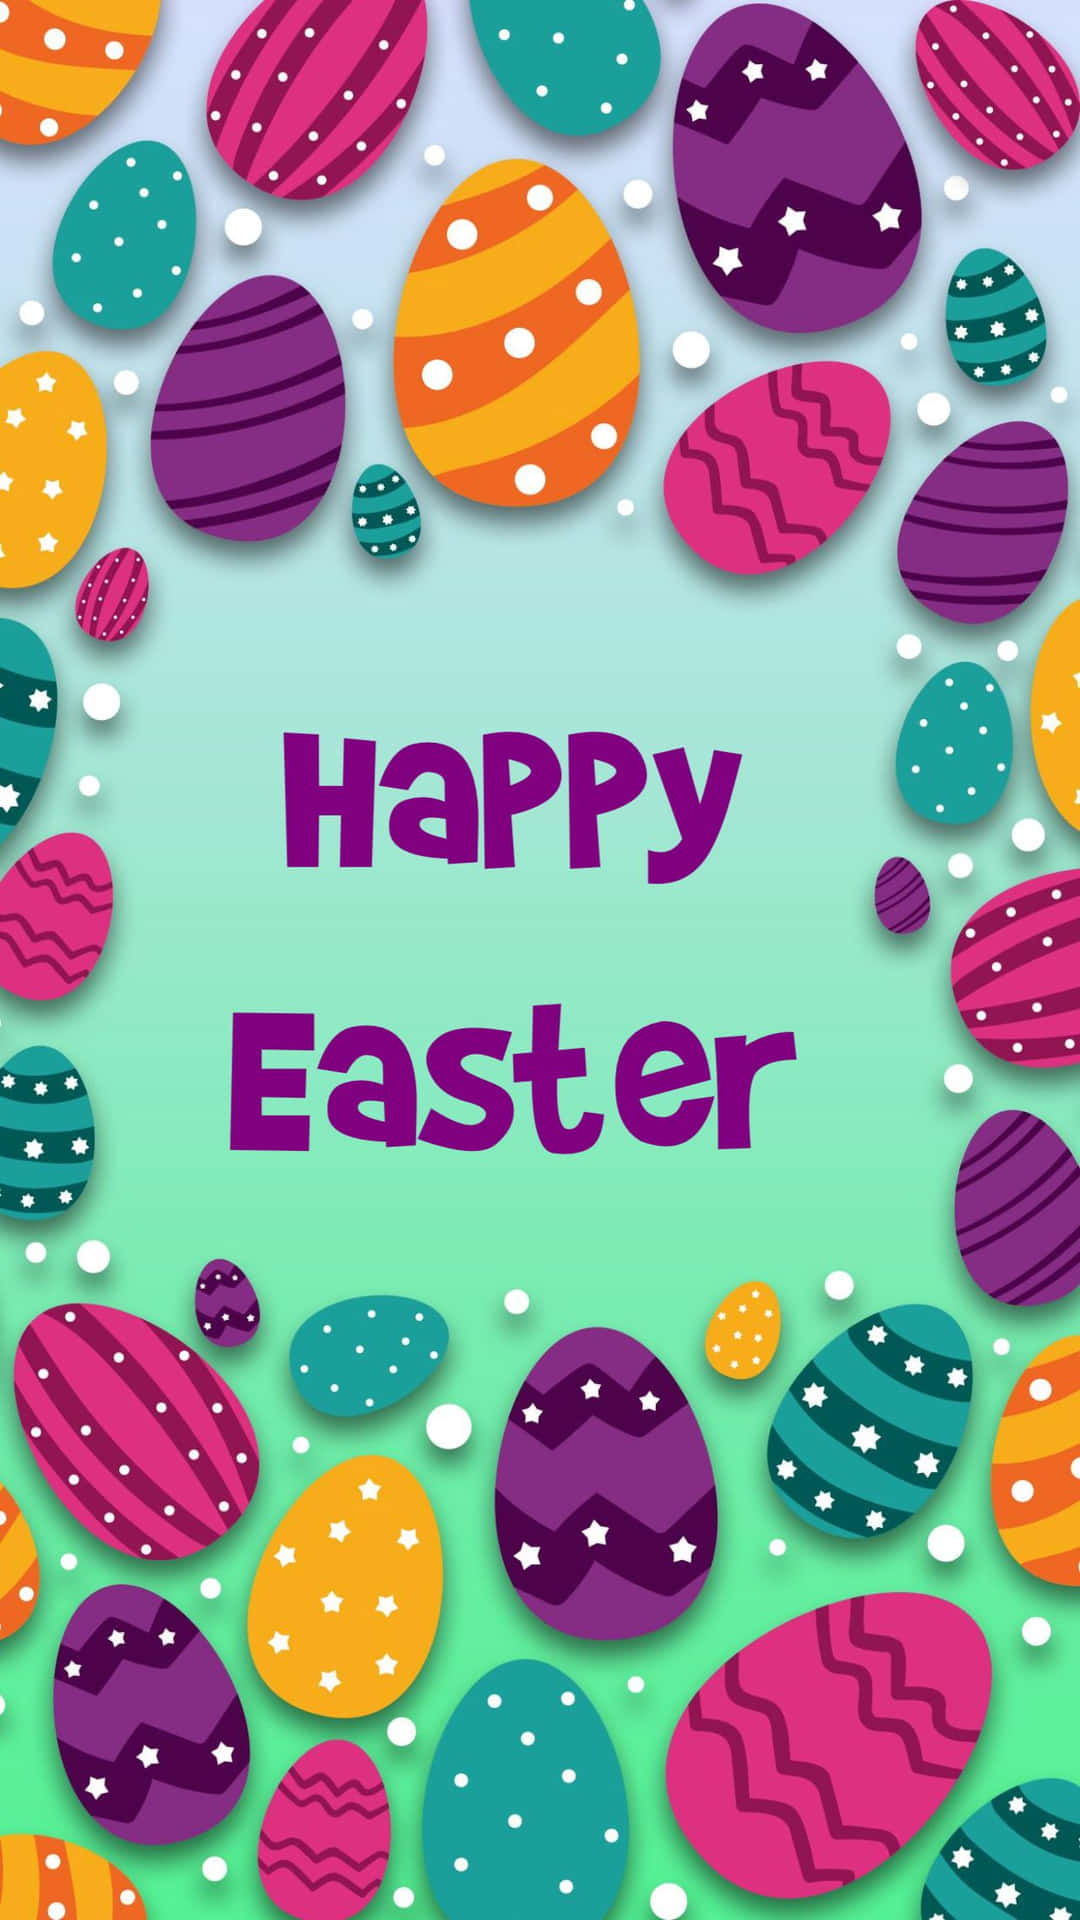 Download Cute Happy Easter Wallpaper